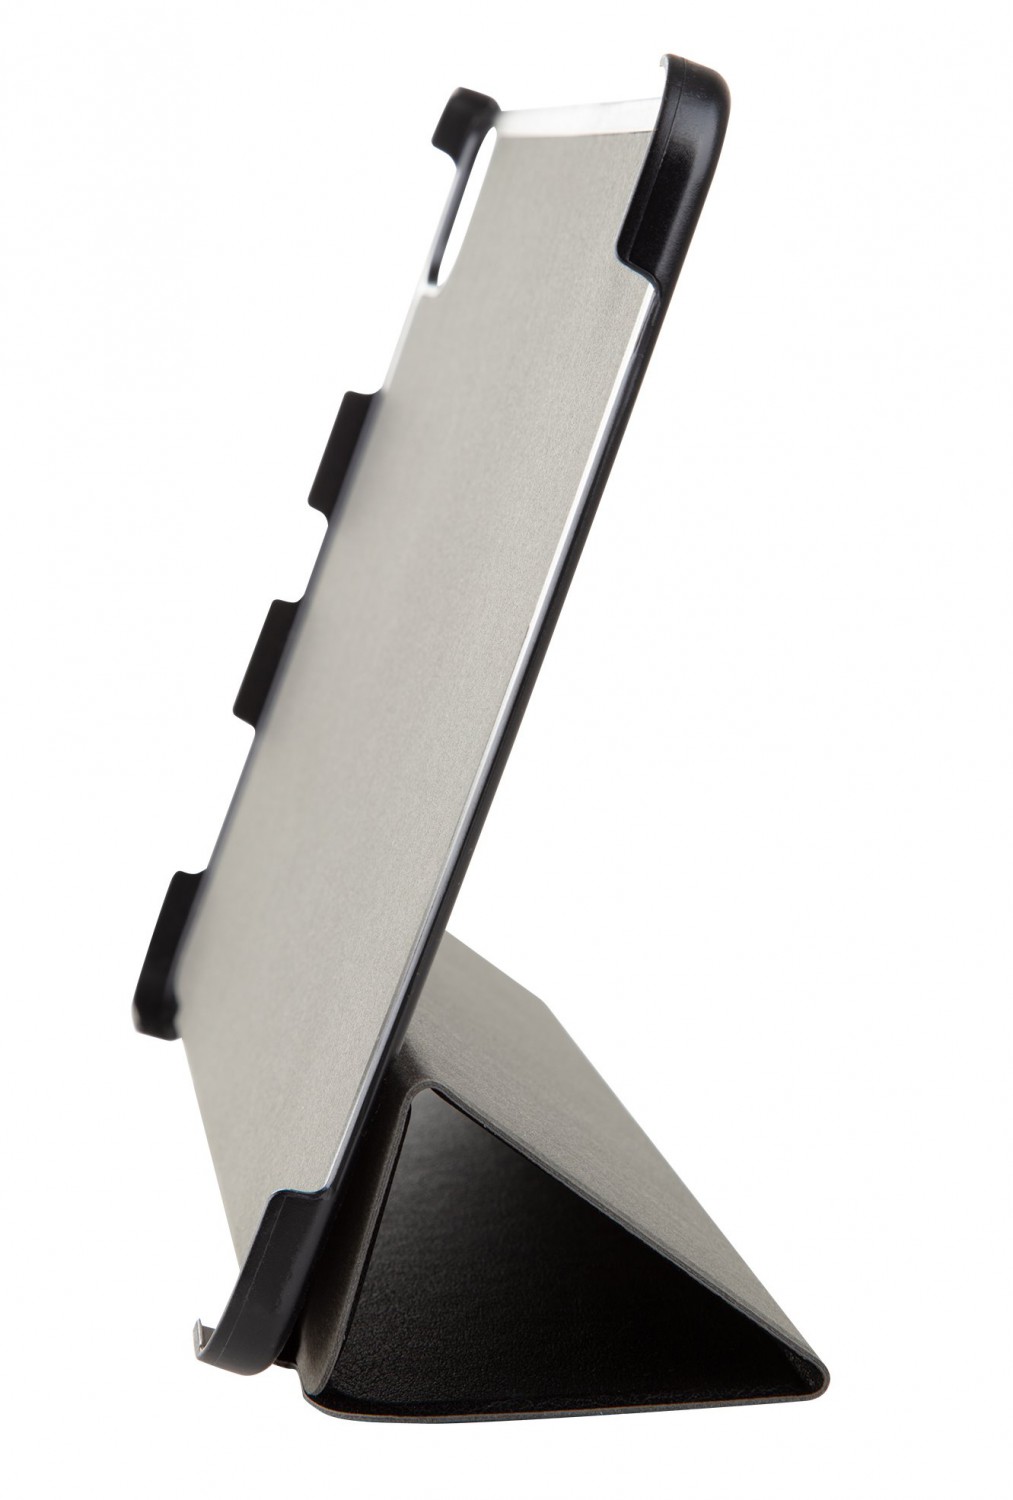 Tactical Book Tri Fold flipové pouzdro pro Samsung Galaxy TAB A7 Lite, černá